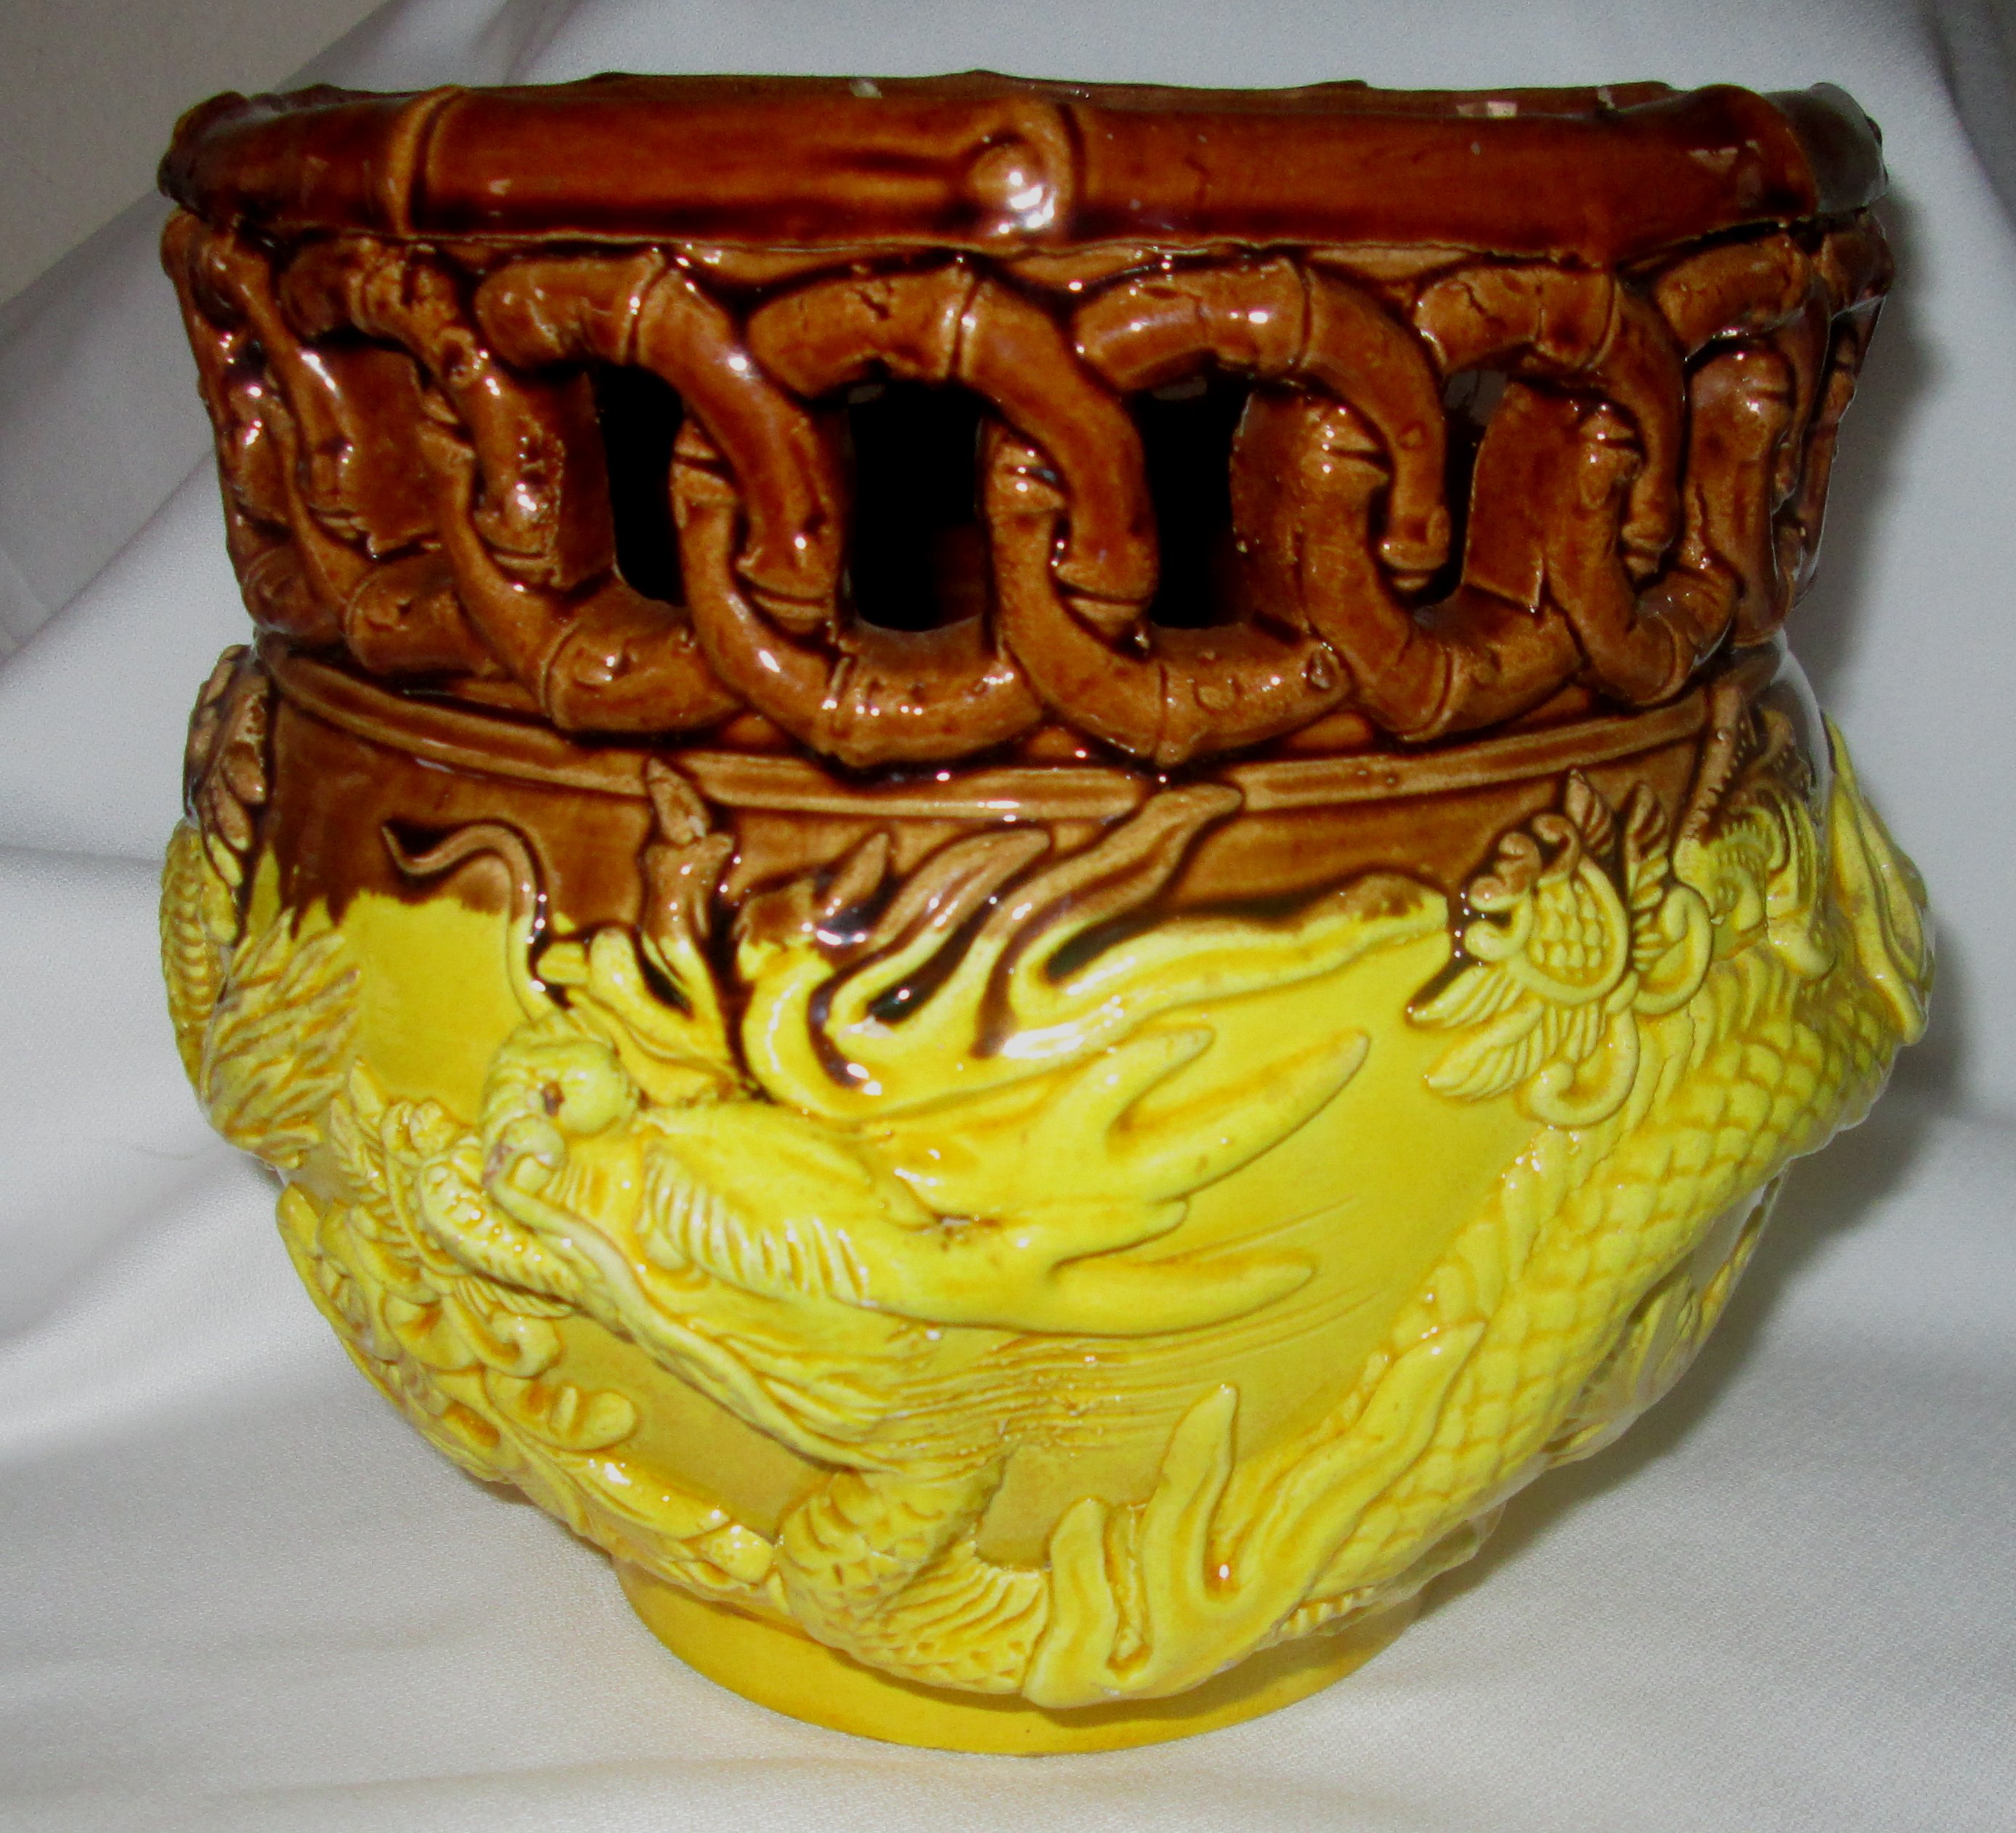 Pottery ceramics 1181.jpg